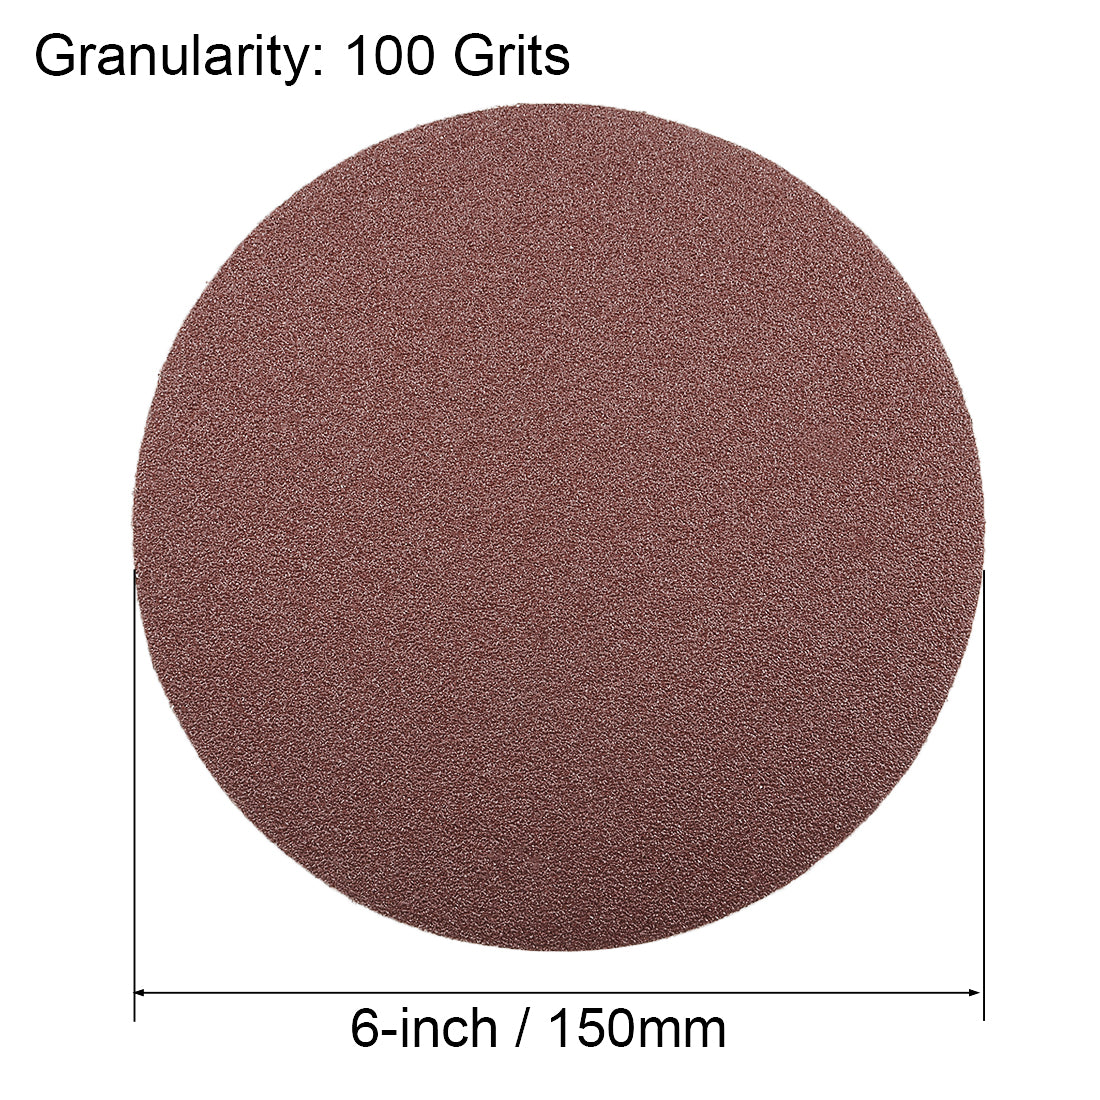 uxcell Uxcell 6-inch 100-Grits PSA Sanding Disc, Adhesive-Backed Sanding Sheets Aluminum Oxide Sandpaper for Random Orbital Sander 10pcs